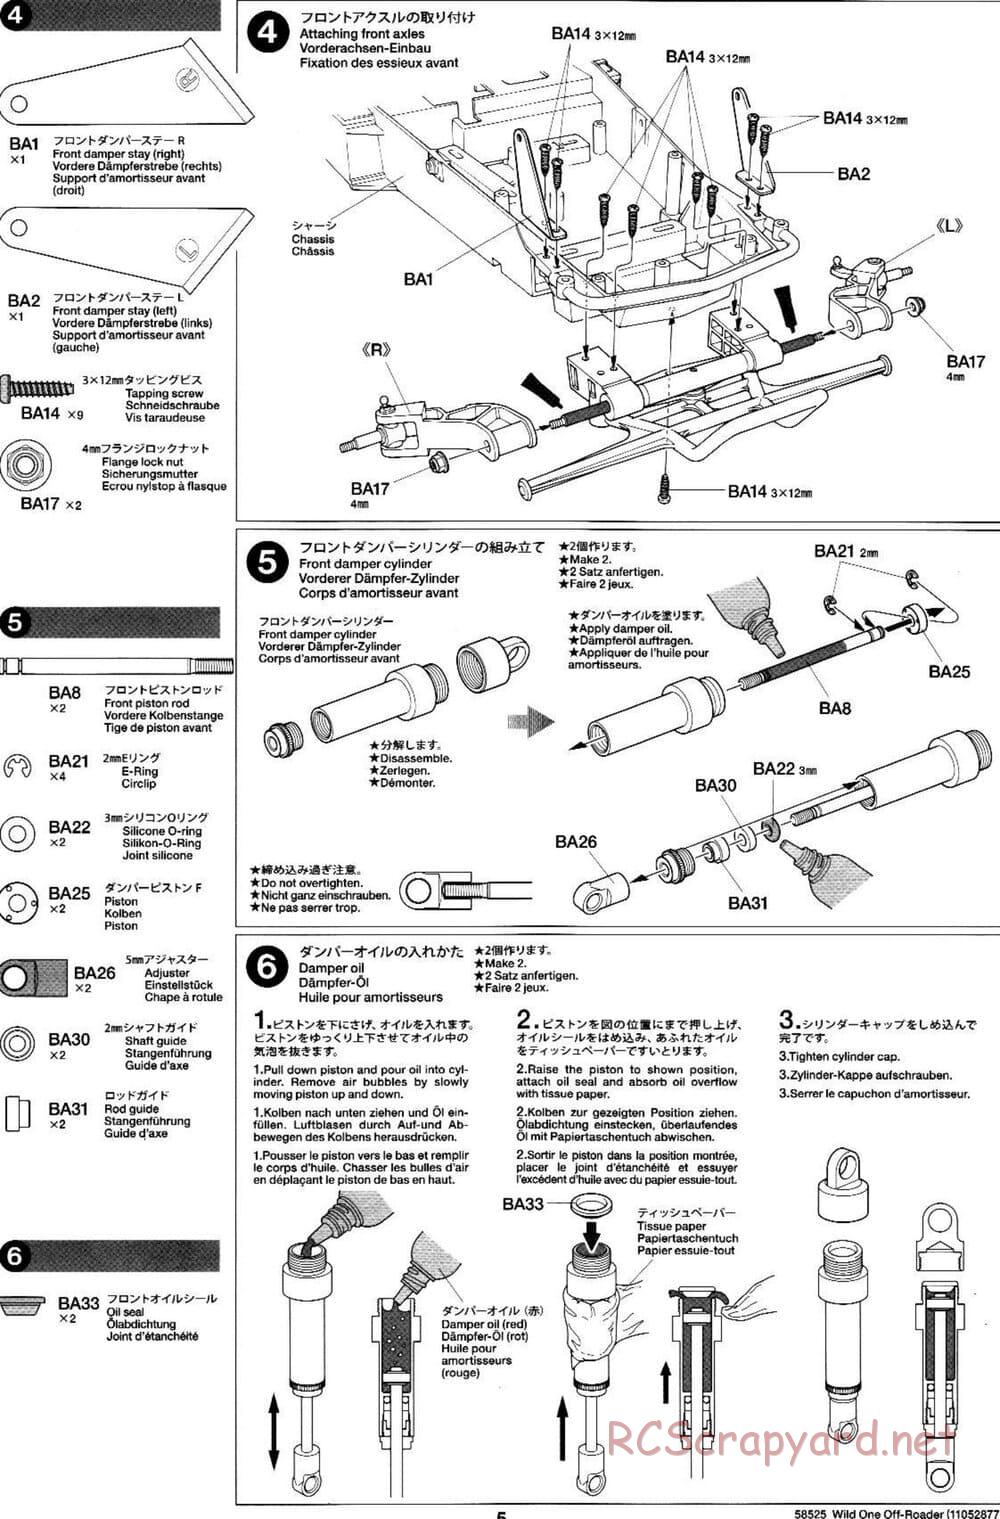 Tamiya - Wild One Off-Roader - FAV Chassis - Manual - Page 5